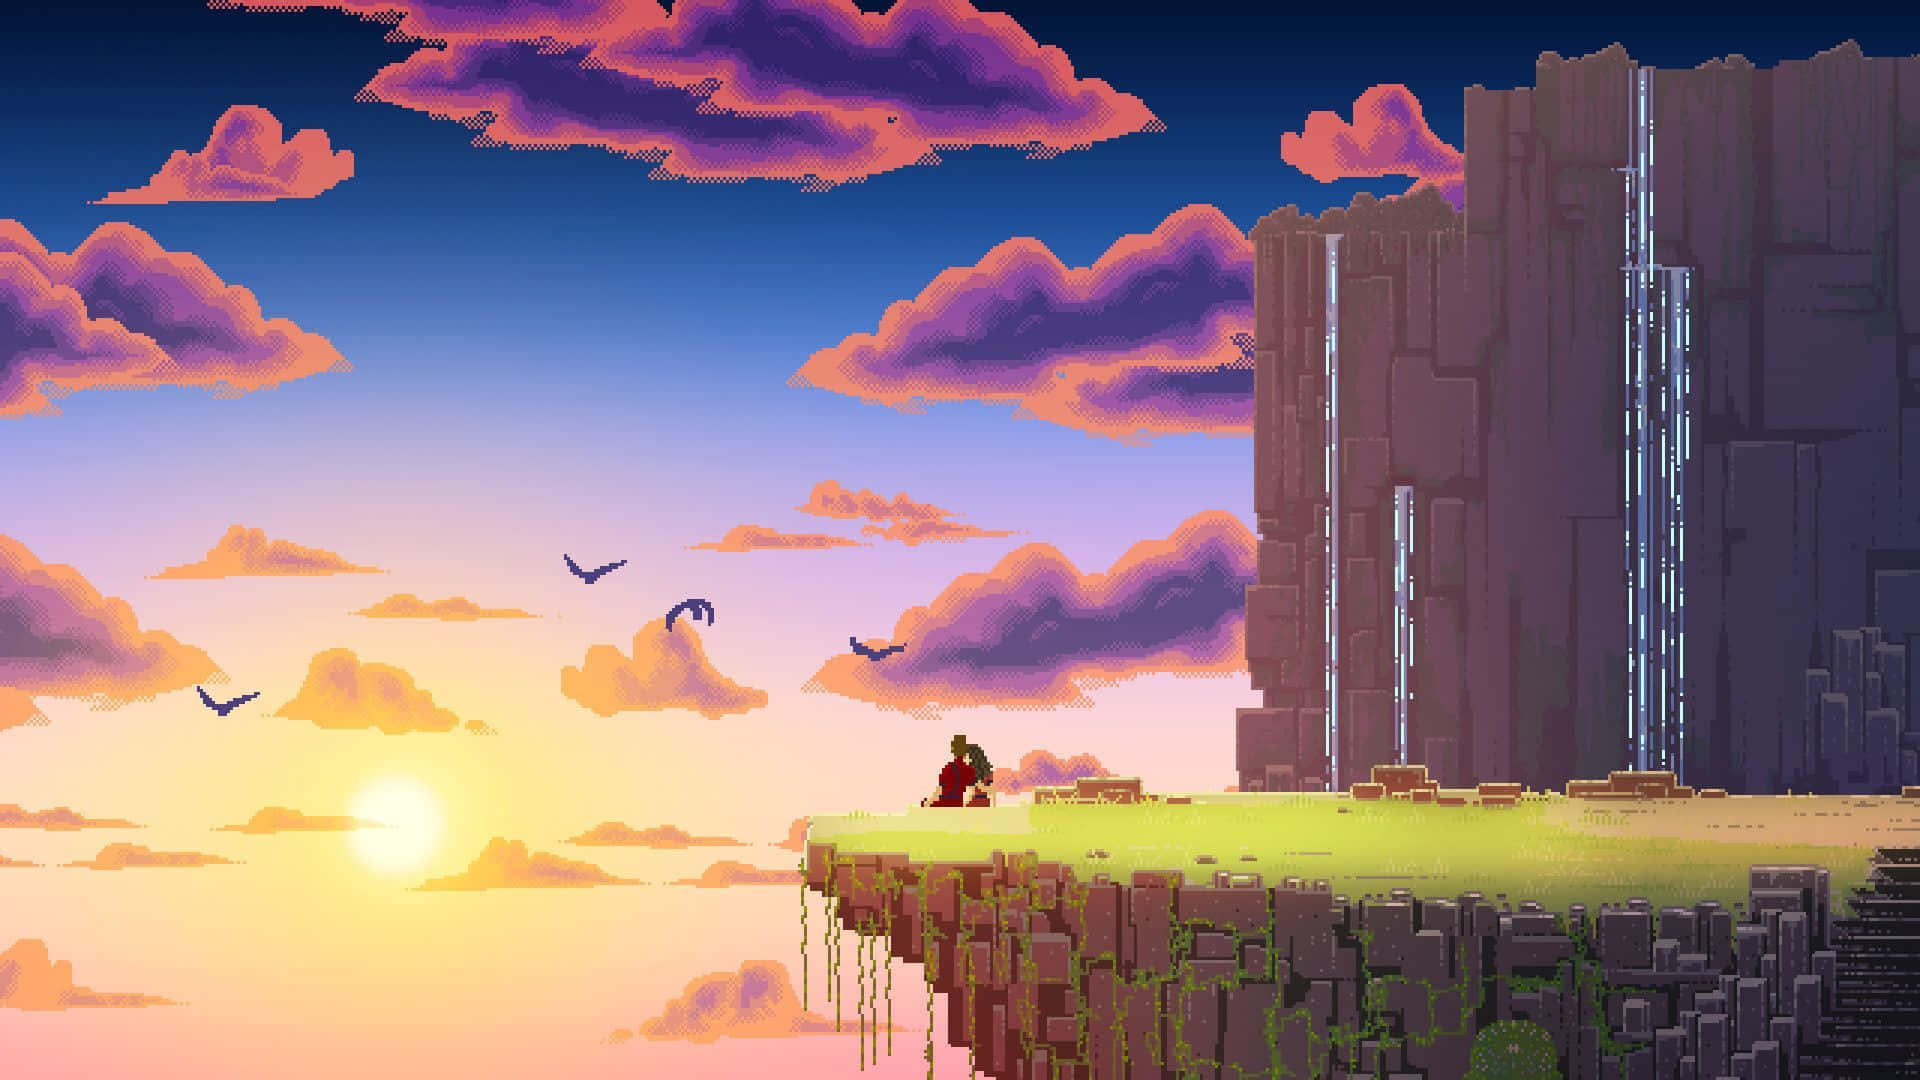 Sunset In Destiny Pixel Art Wallpaper